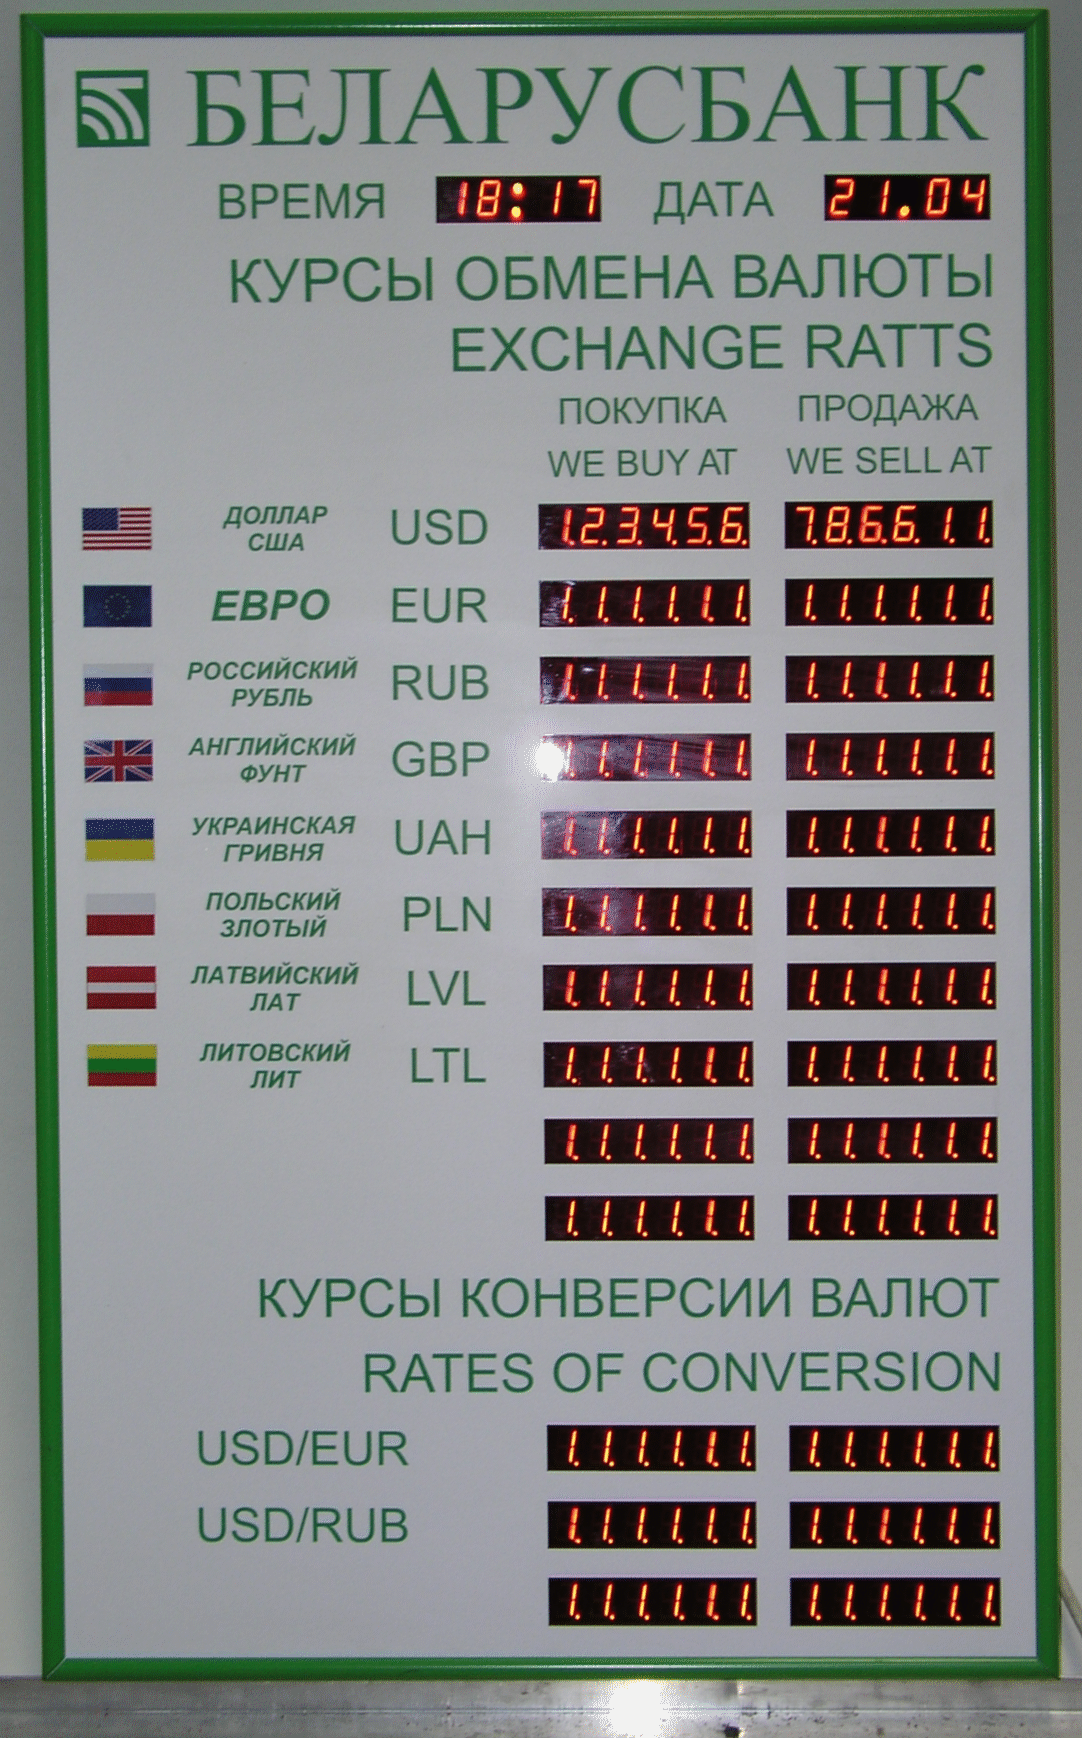 обмен валют орша беларусбанк